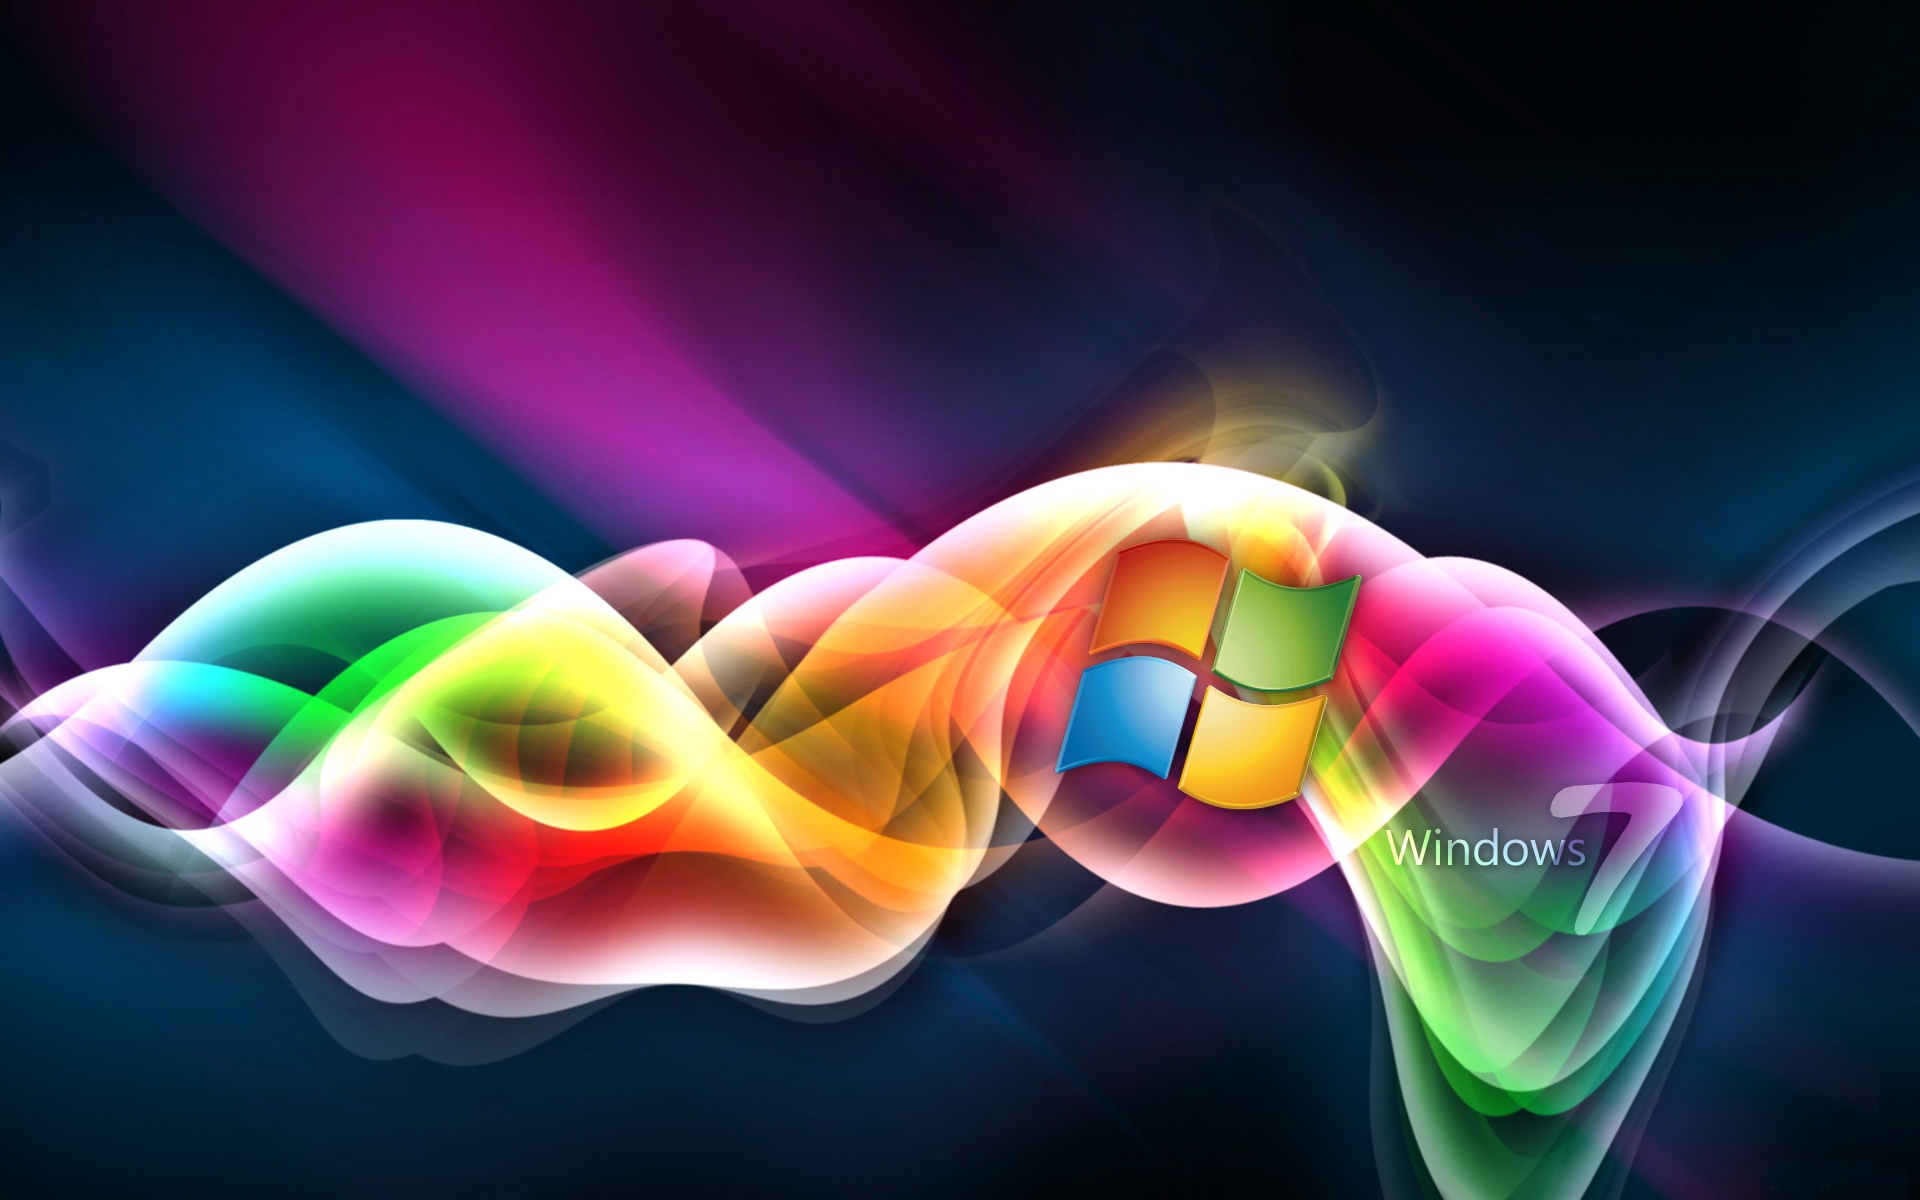 Free download 45 Spectacular Windows 7 Desktop Backgrounds [1920x1200